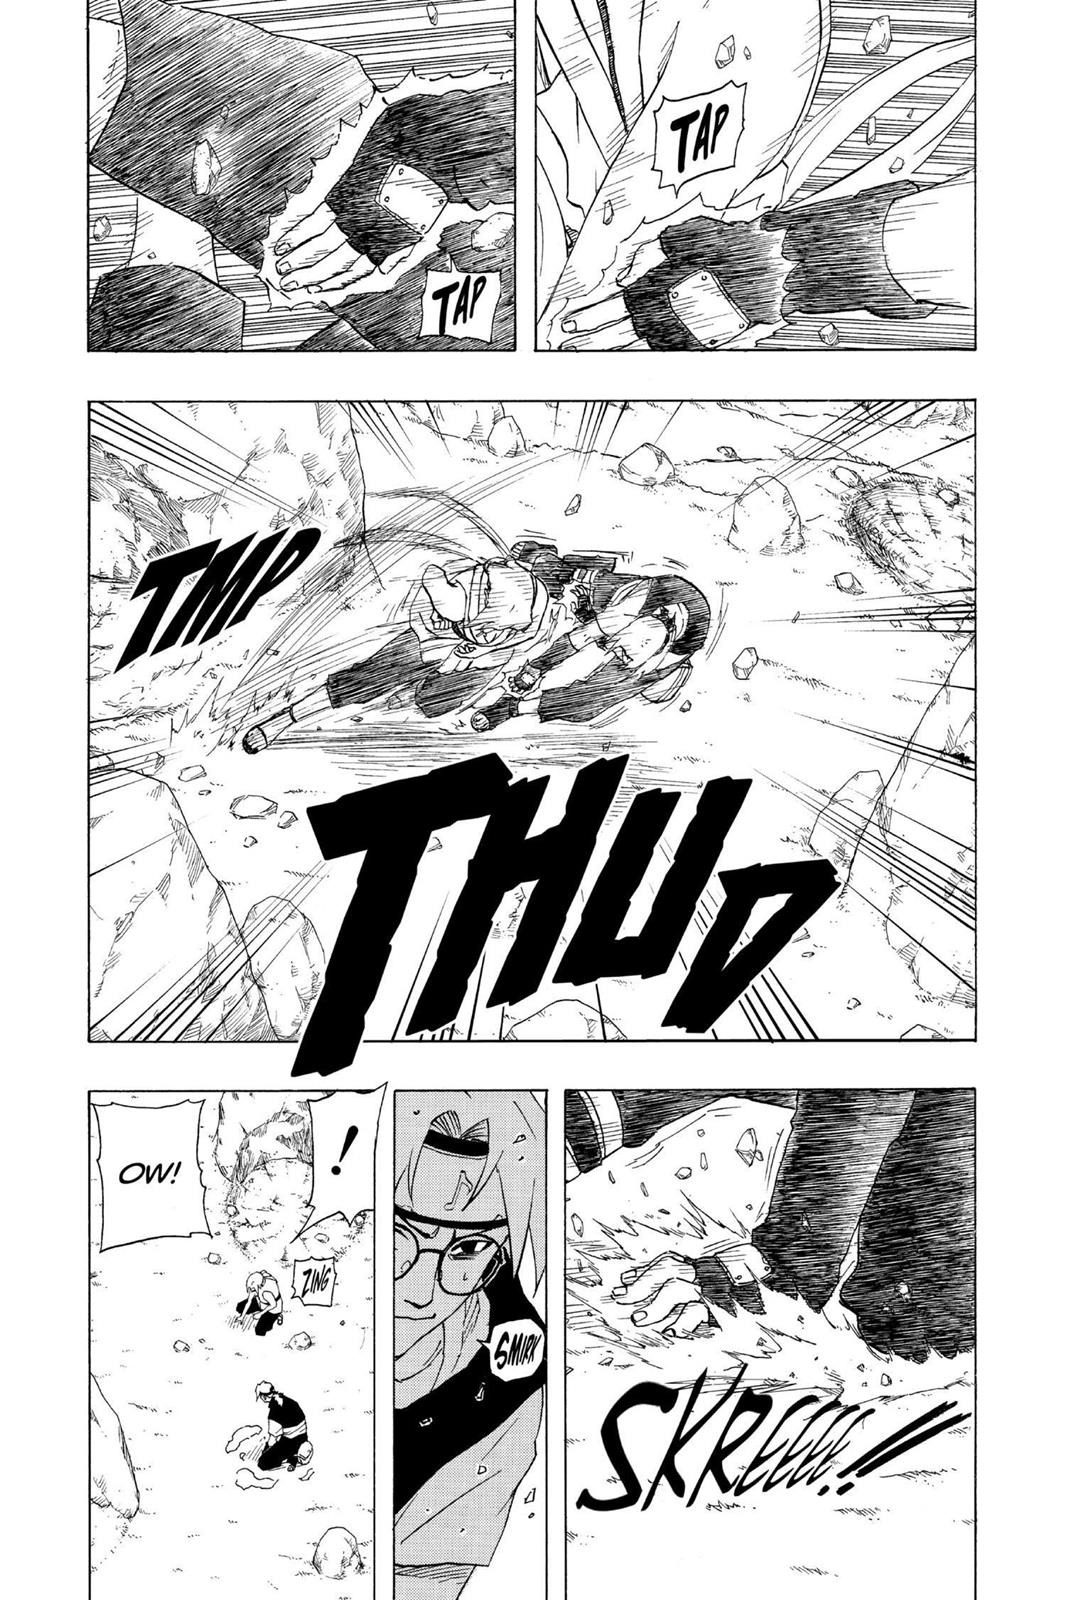 Sakura (Boruto) vs Naruto (Boruto/Sem Kurama)  - Página 6 0164-010